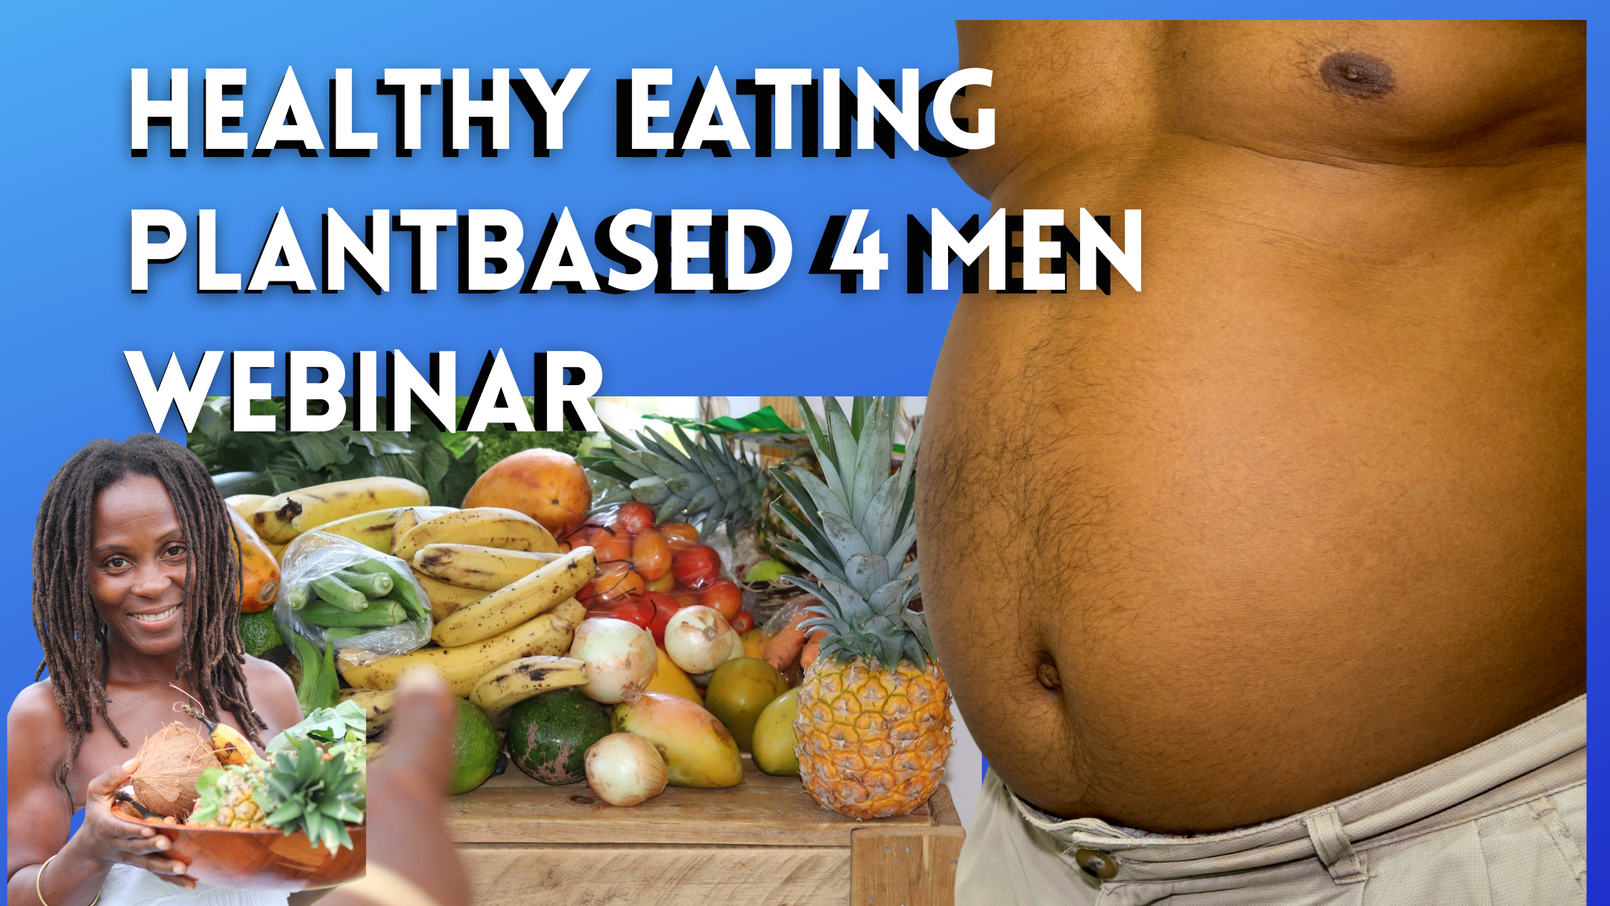 4Men Healthy Plantbased Eating Lifestyle